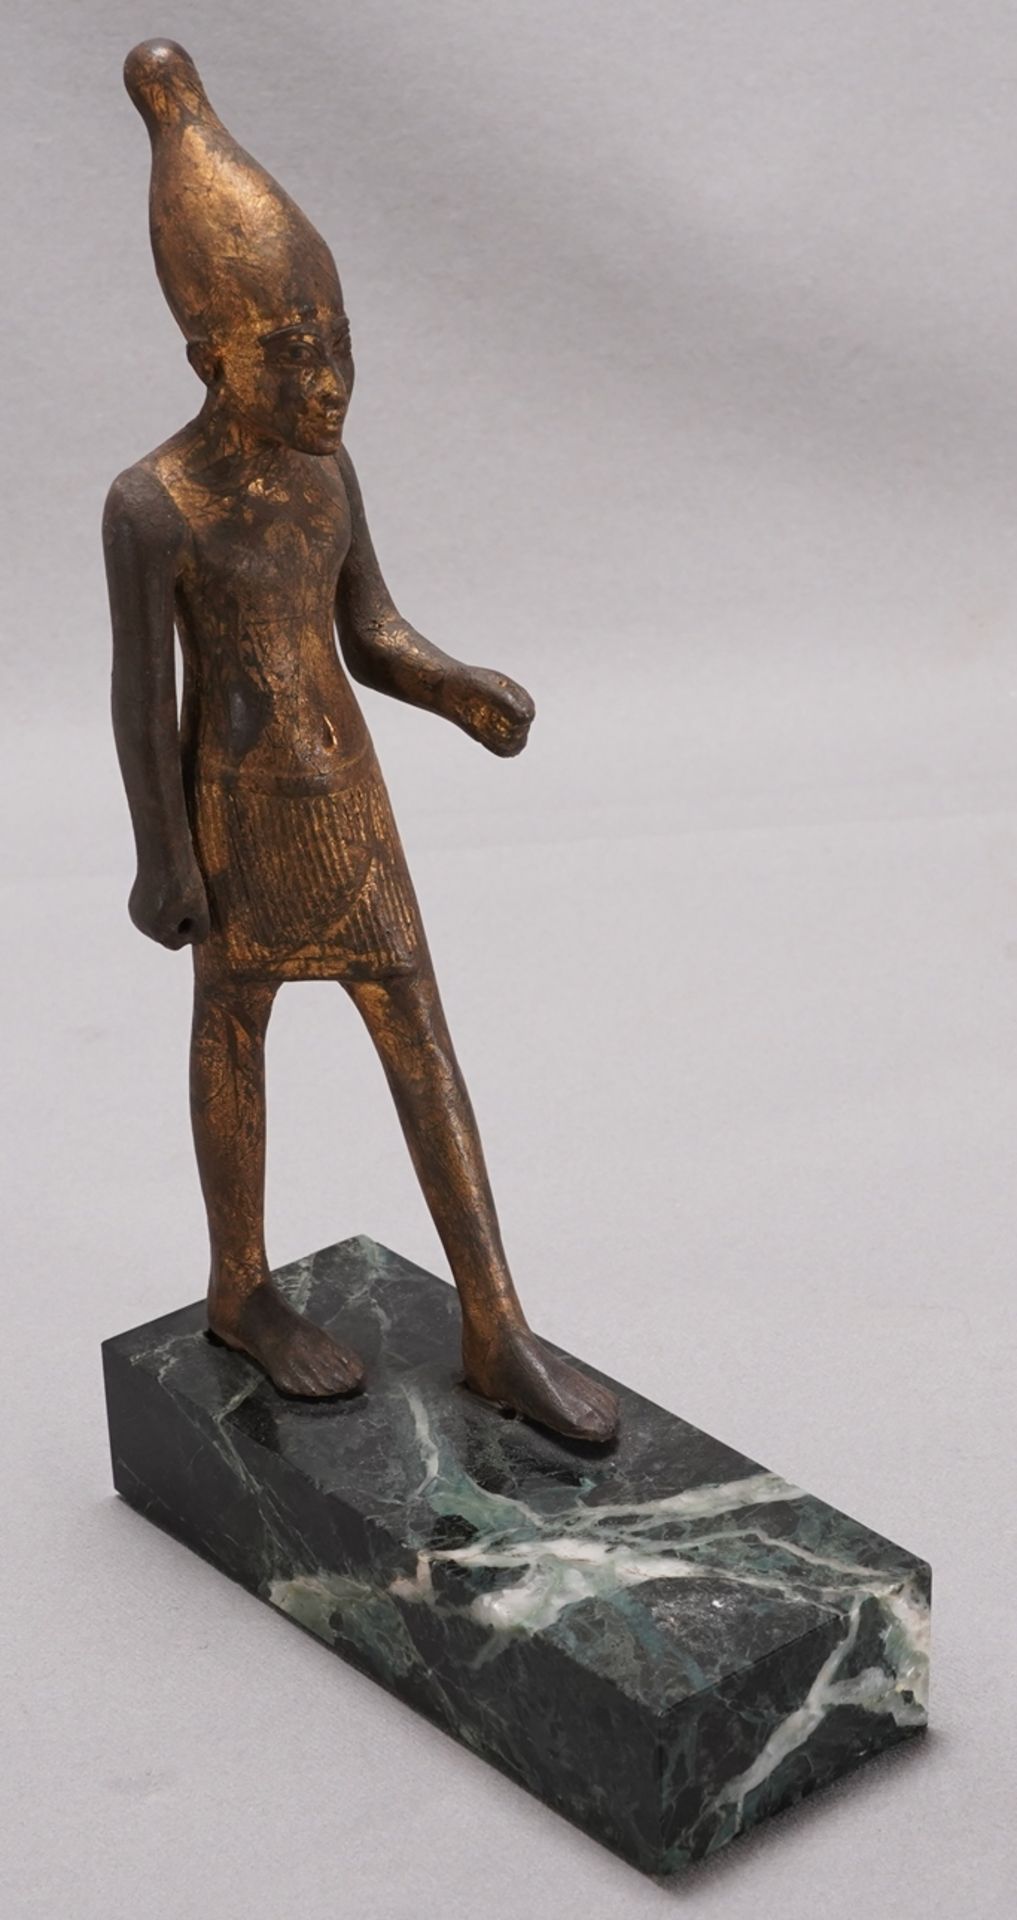 Striding Osiris with Pschent crown